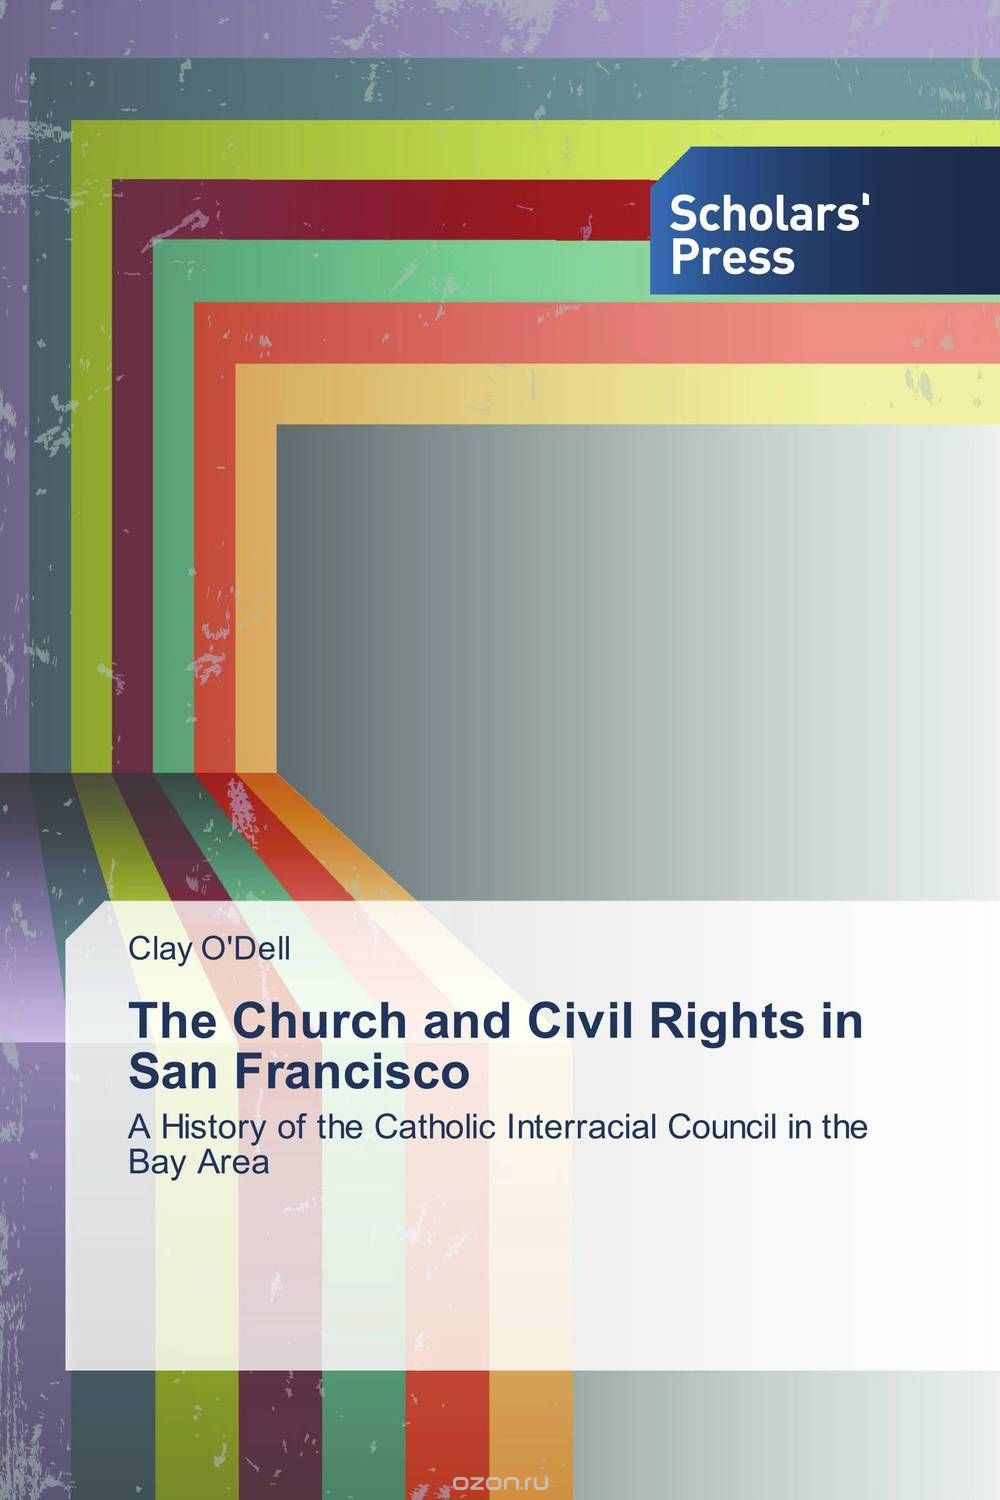 Скачать книгу "The Church and Civil Rights in San Francisco"